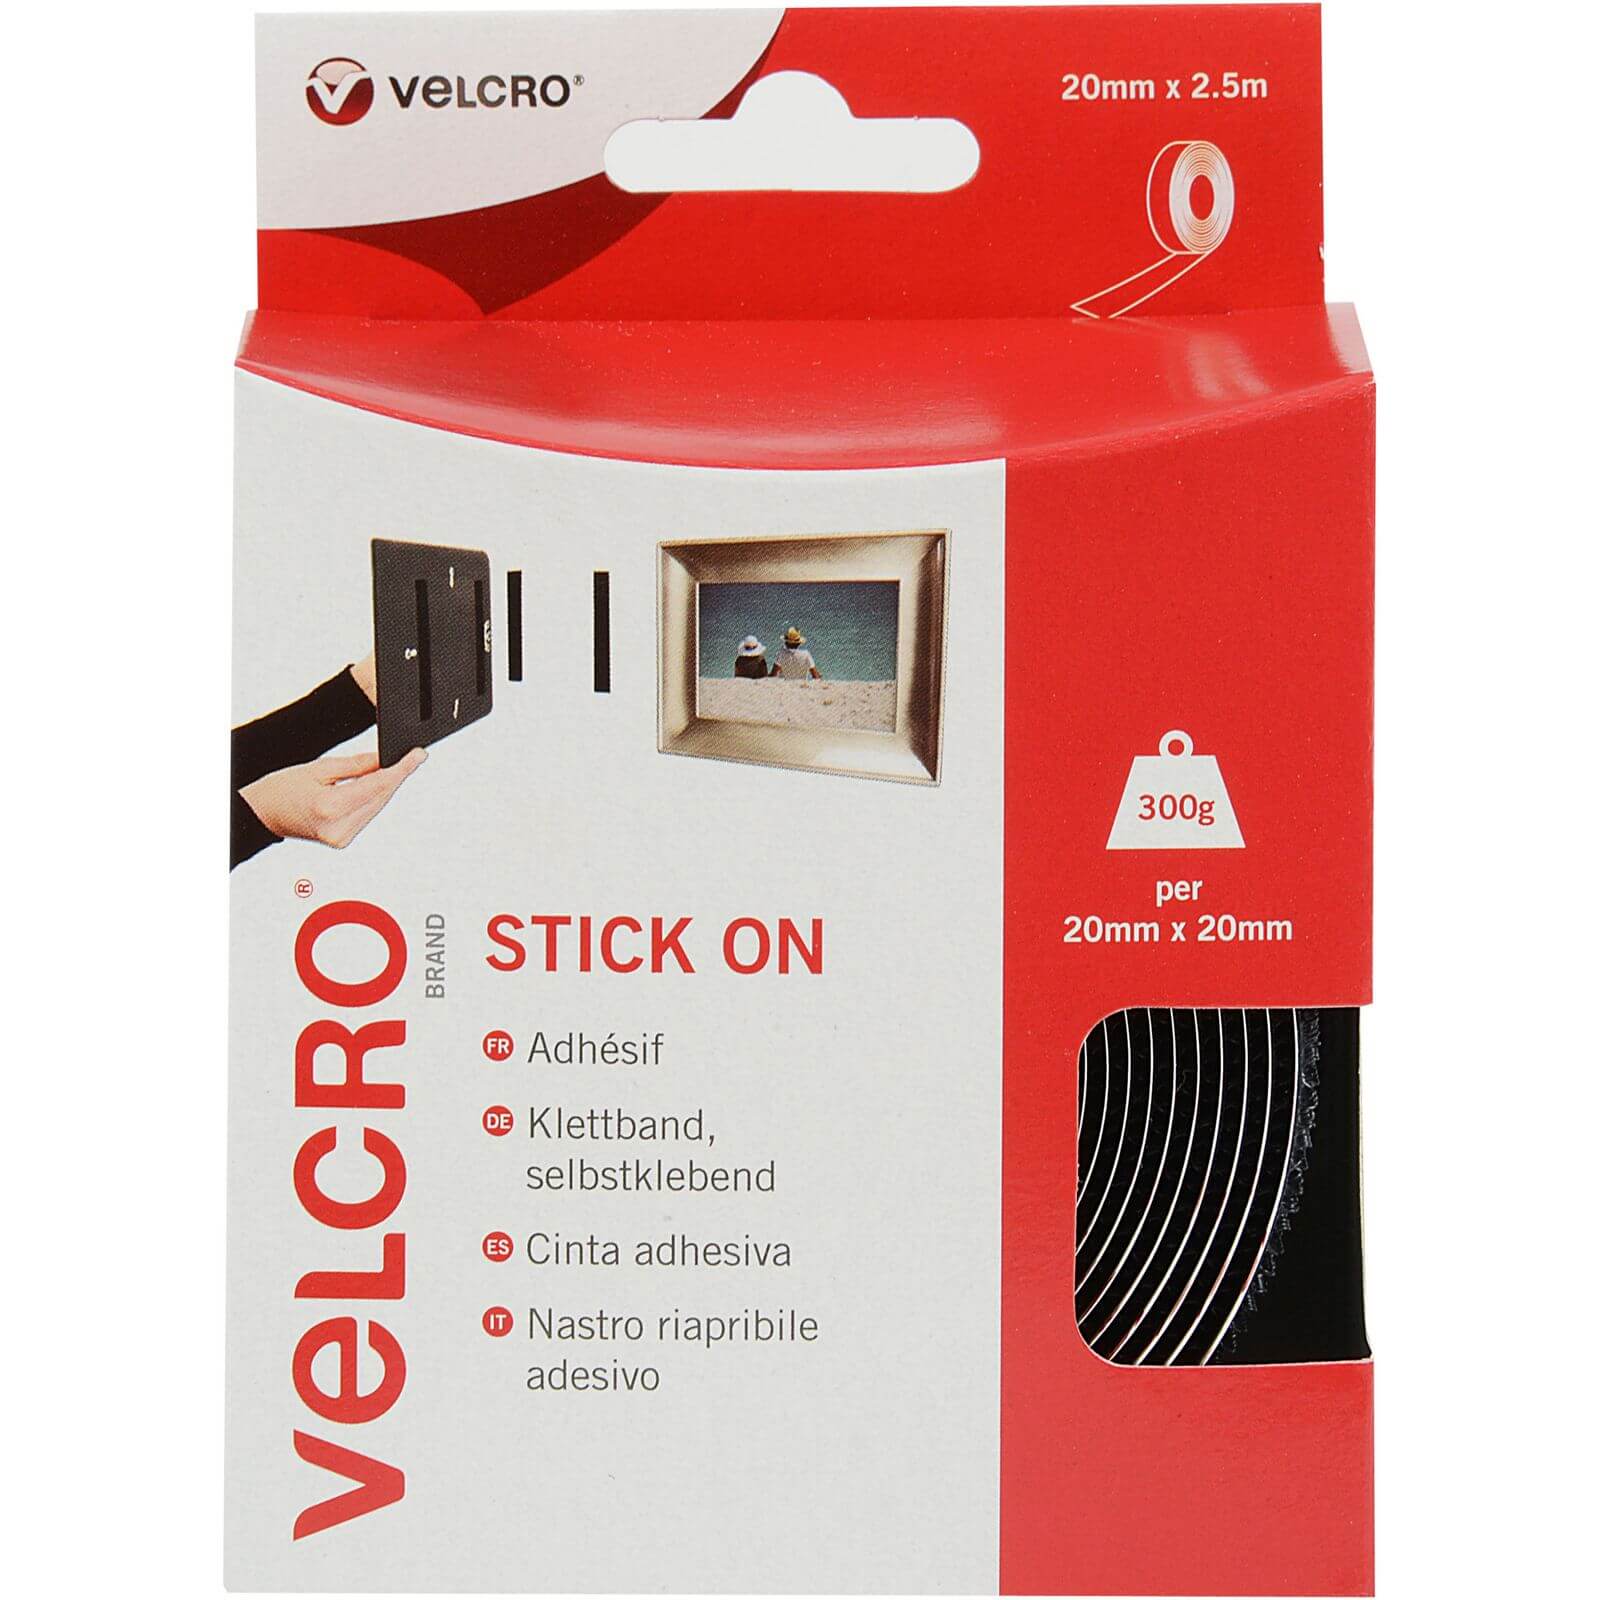 VELCRO? Brand Stick On Tape 20mm x 2.5m - Black